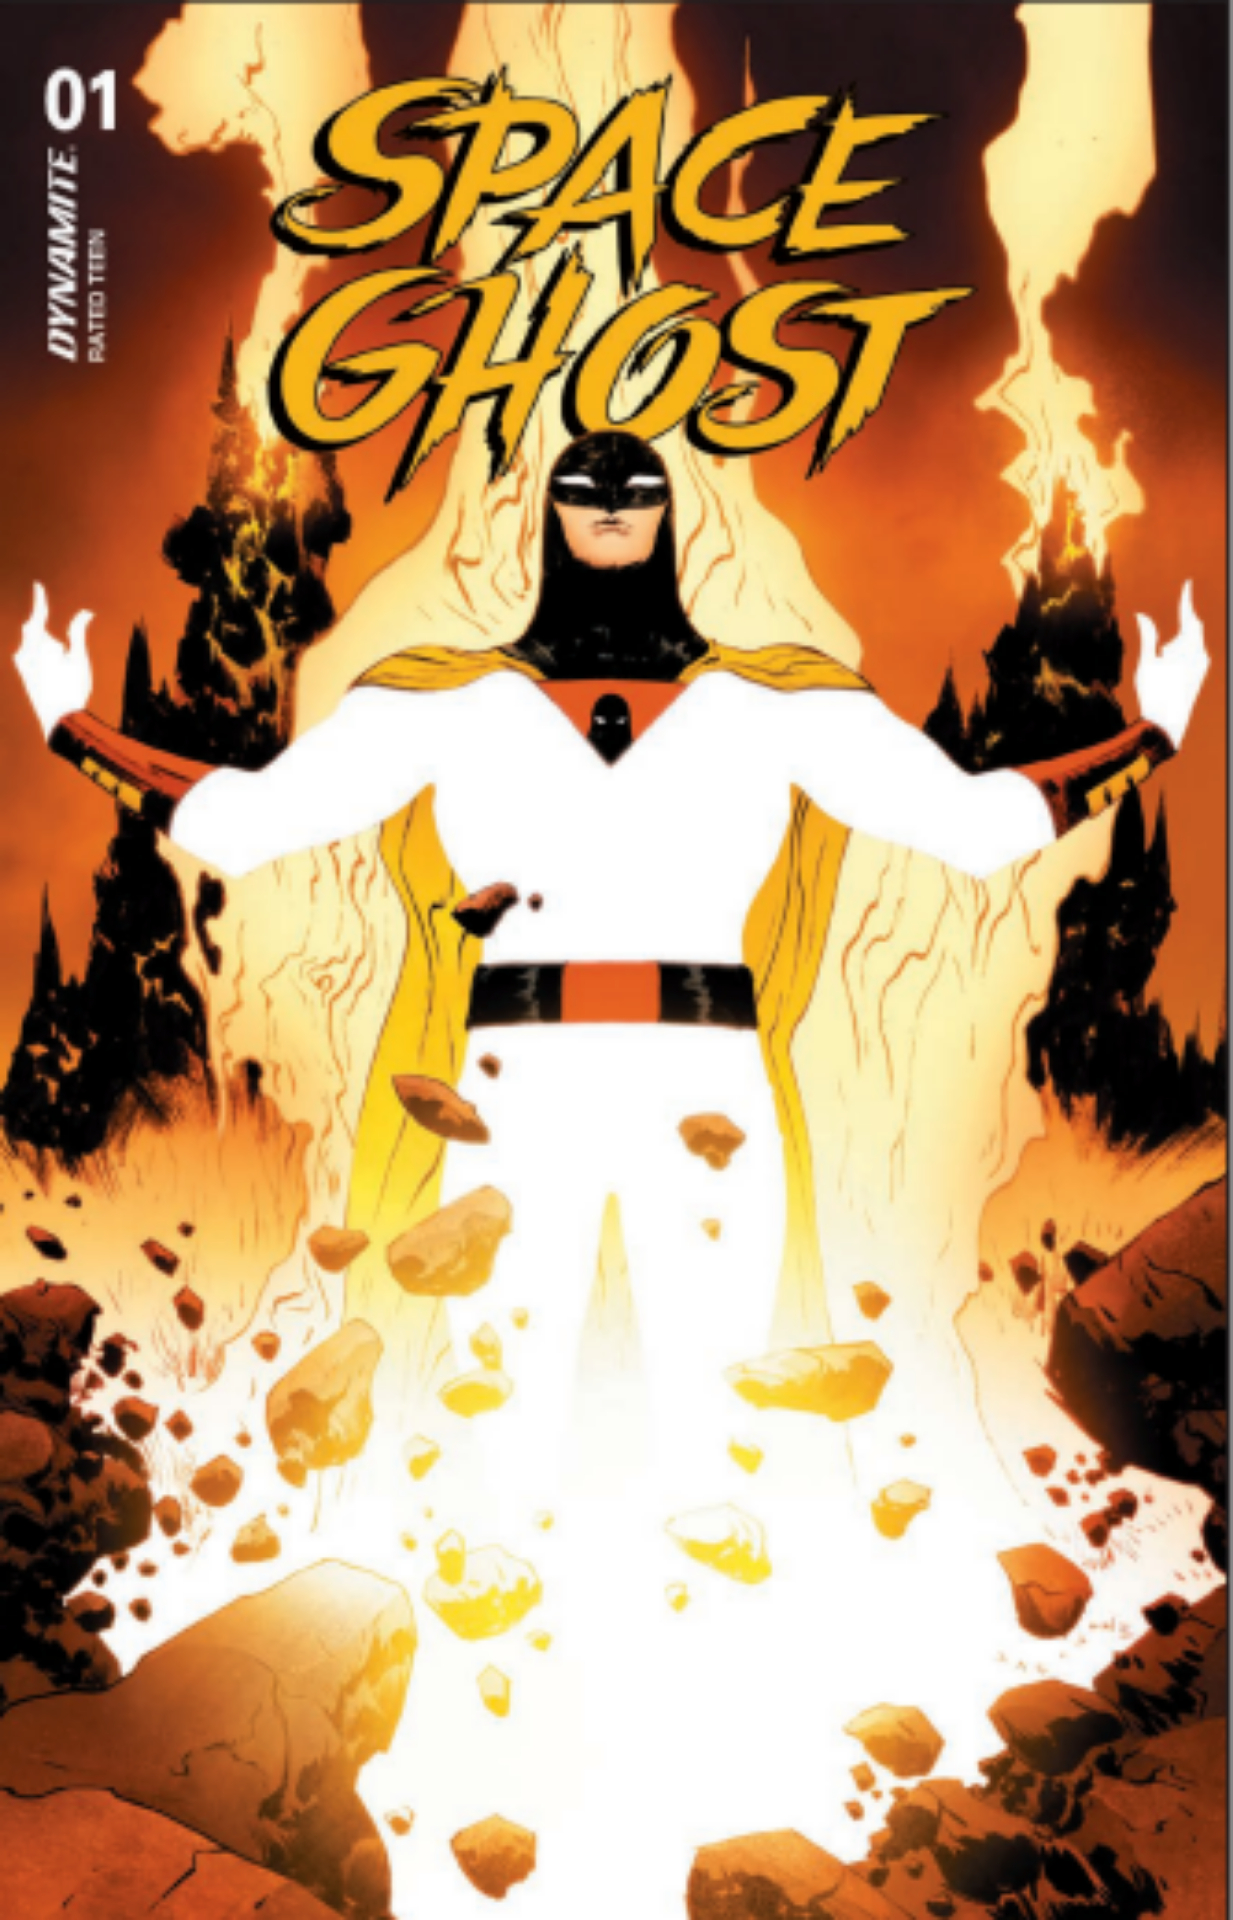 Space Ghost #1 cover door Jae Lee